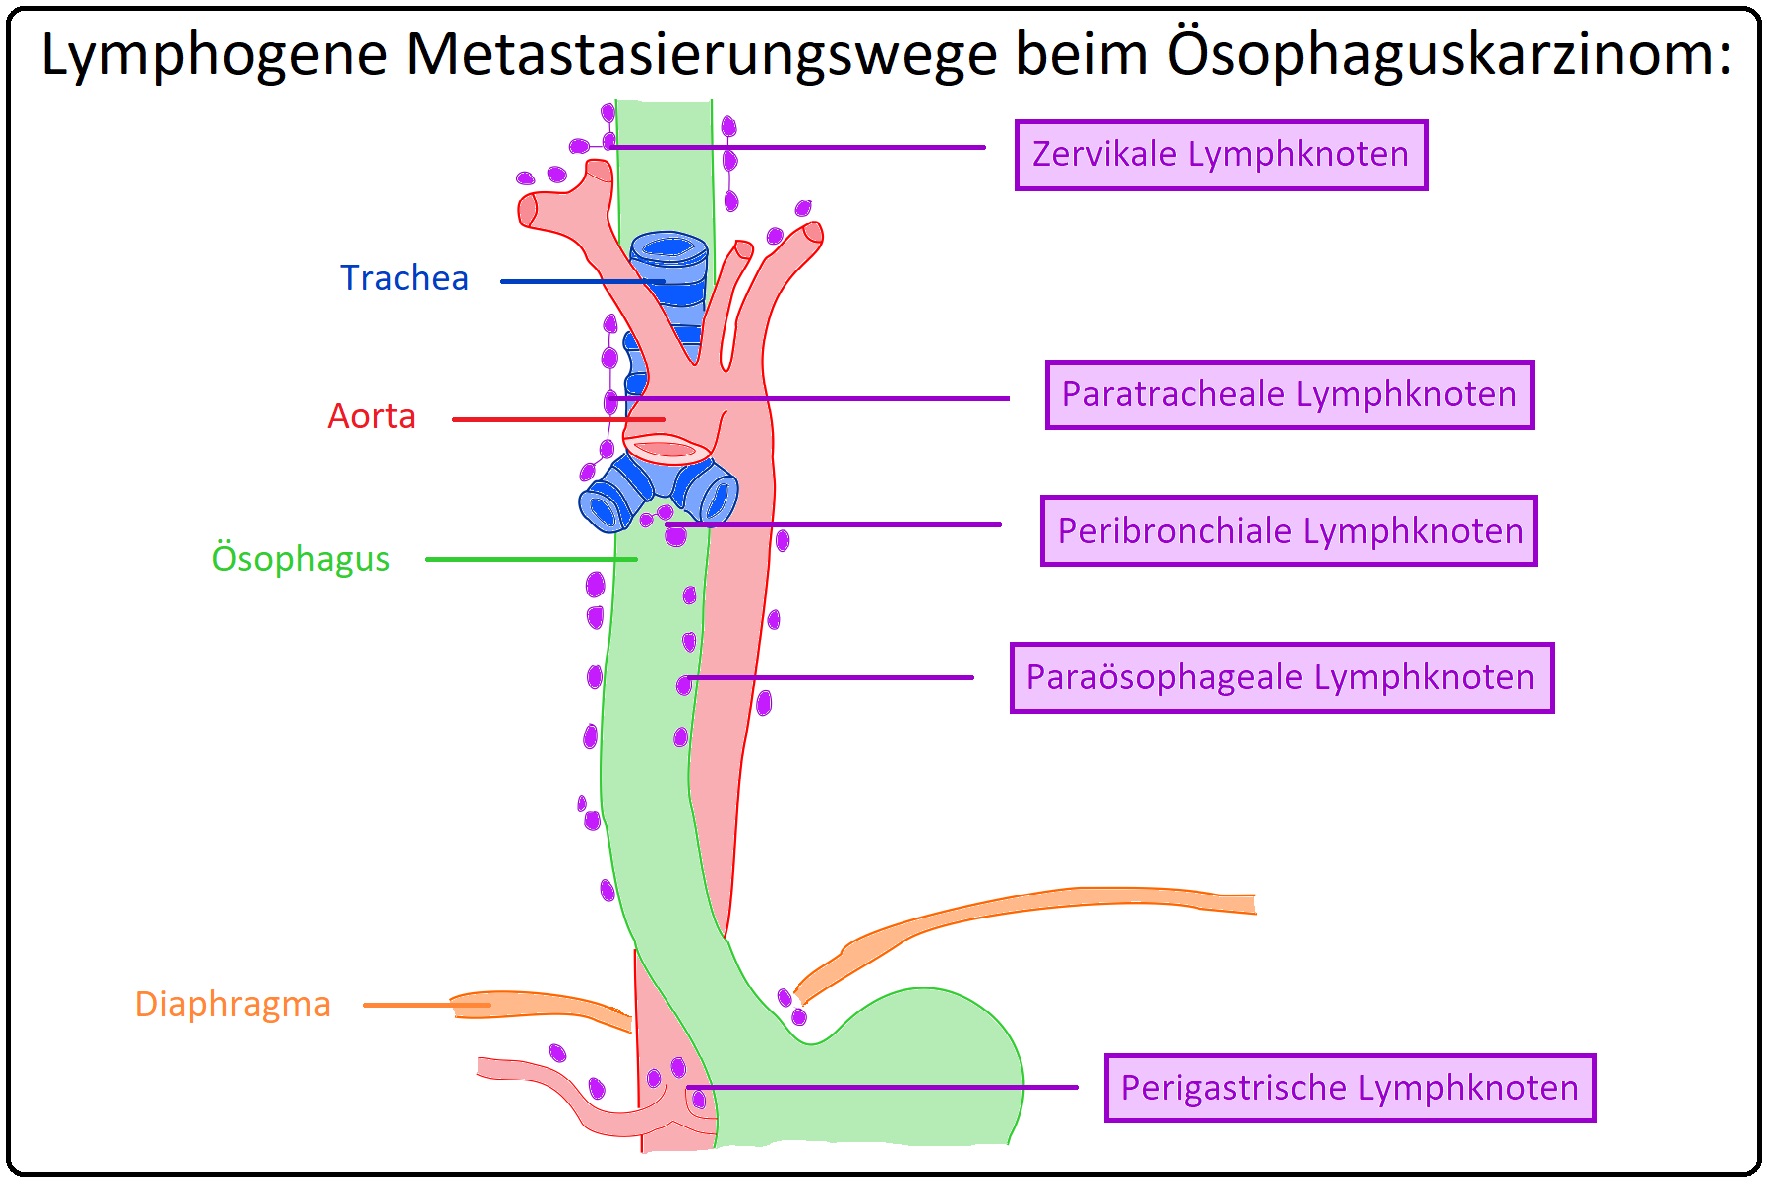 609 Lymphogene Metastasierungswege beim Ösophaguskarzinom